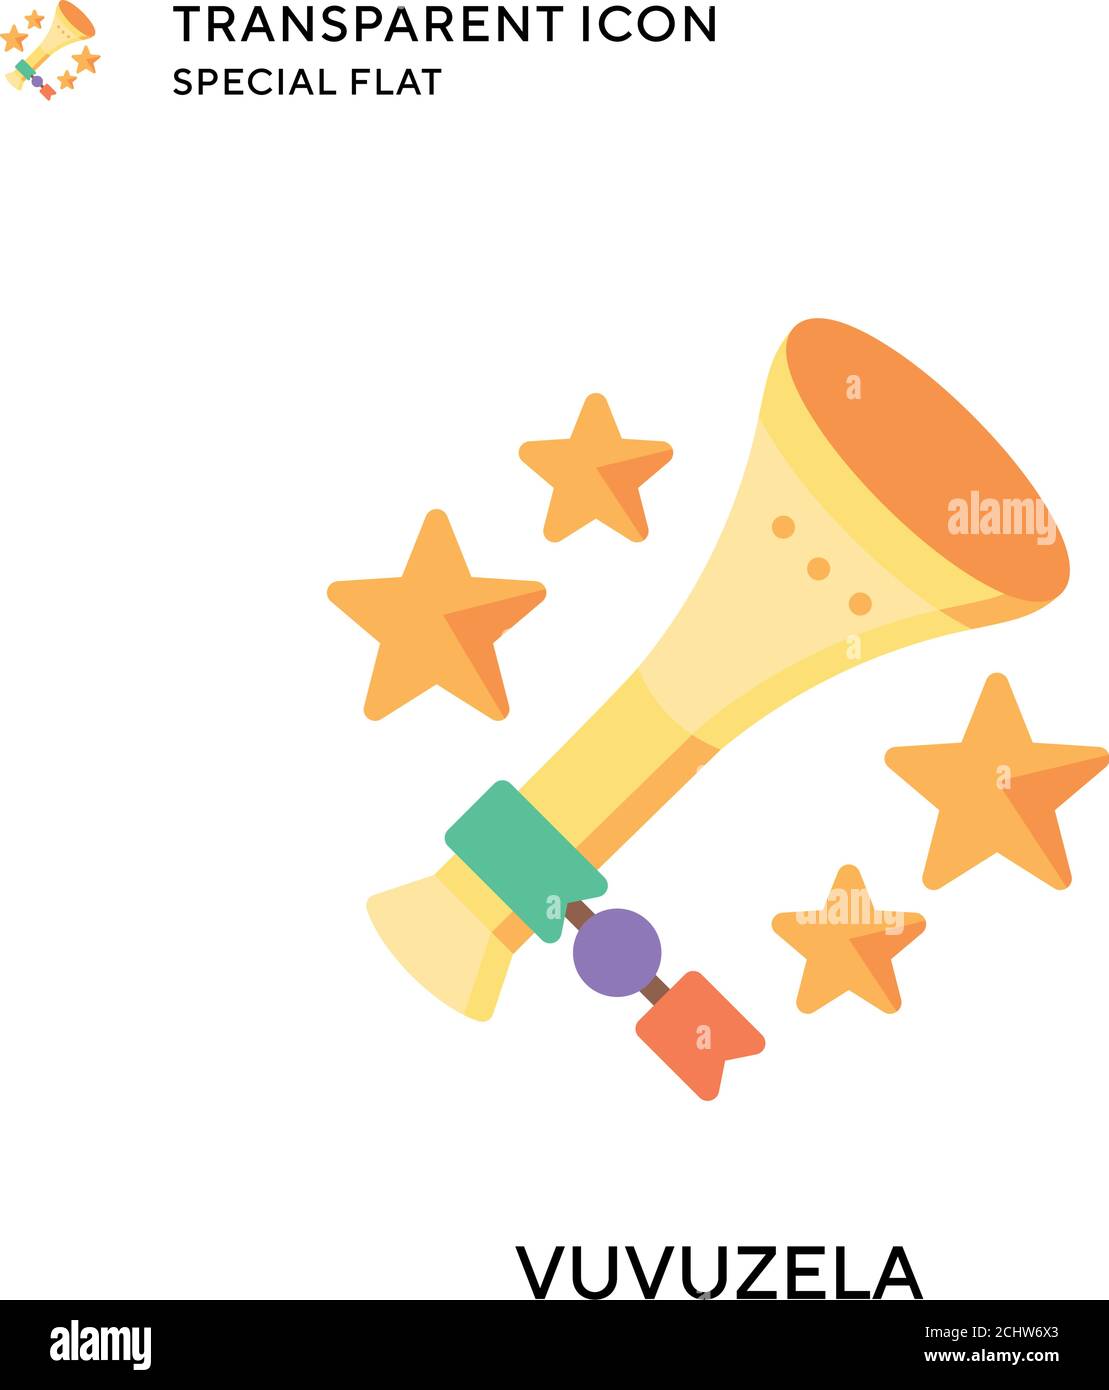 Vuvuzela vector icon. Flat style illustration. EPS 10 vector. Stock Vector